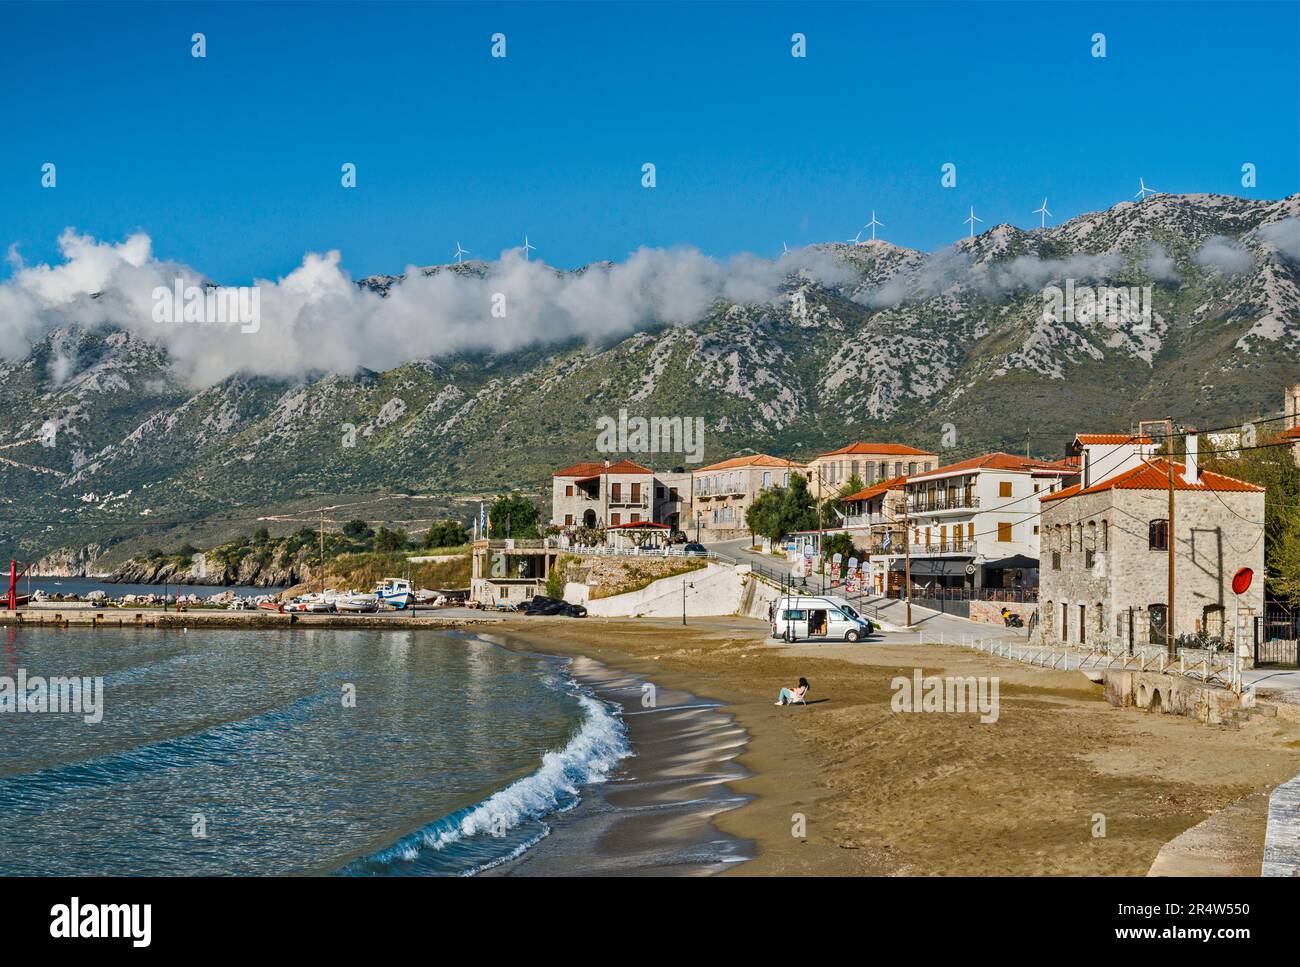 Village of Kotronas, Laconian Gulf harbor, wind turbines at Mount Sangias massif, Taygetos Mountains, Laconian Mani, Peloponnese region, Greece Stock Photo